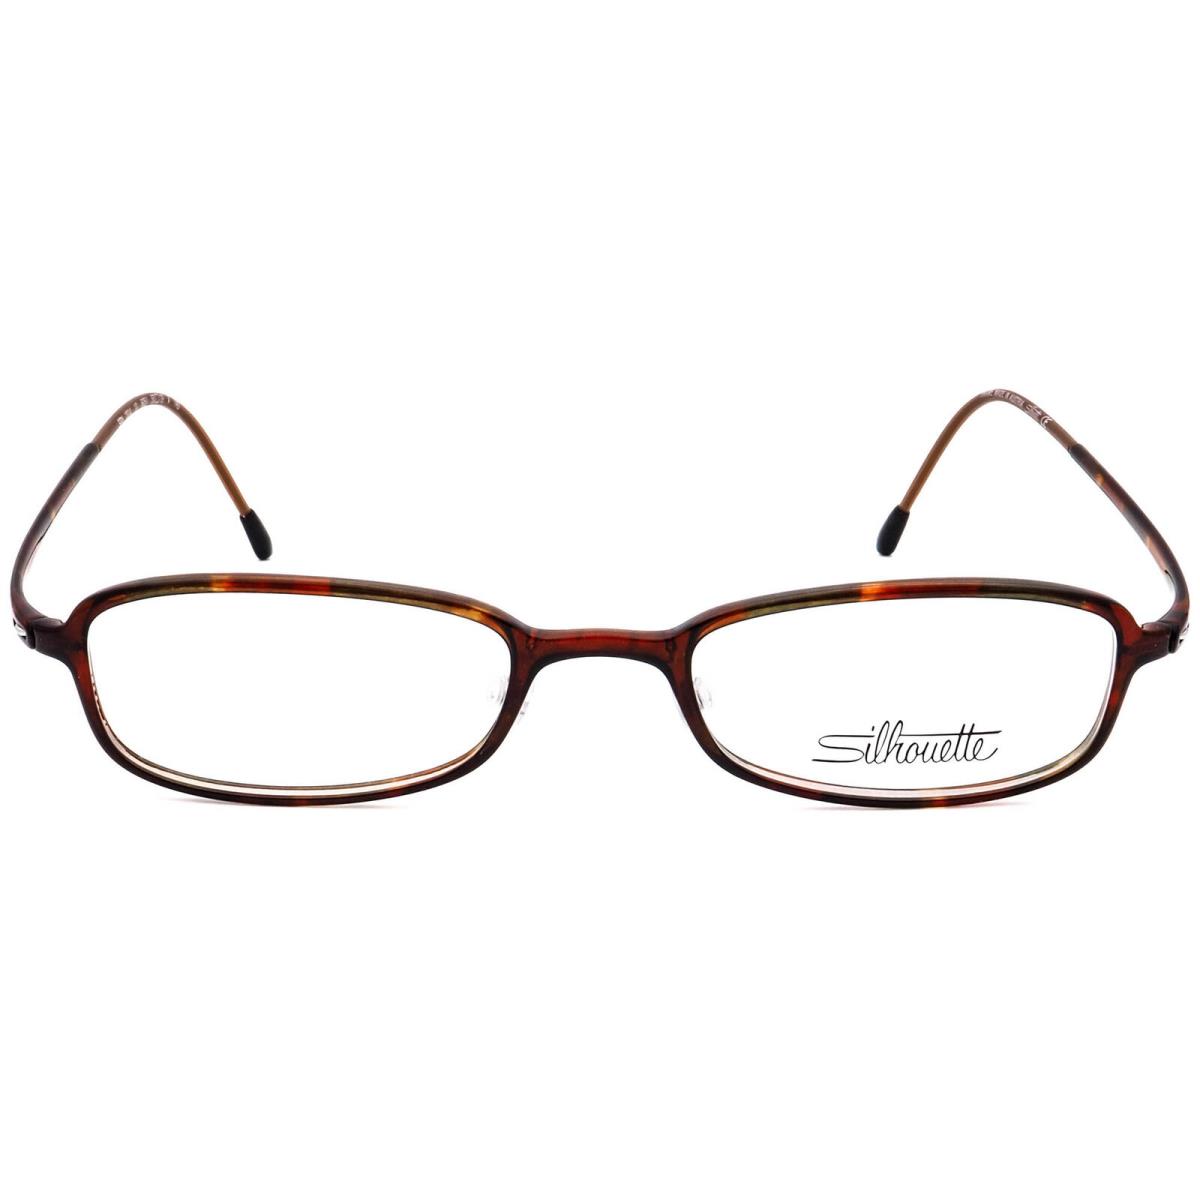 Silhouette Eyeglasses Spx 2834 10 6051 Brown/green Tortoise Austria 50 19 140